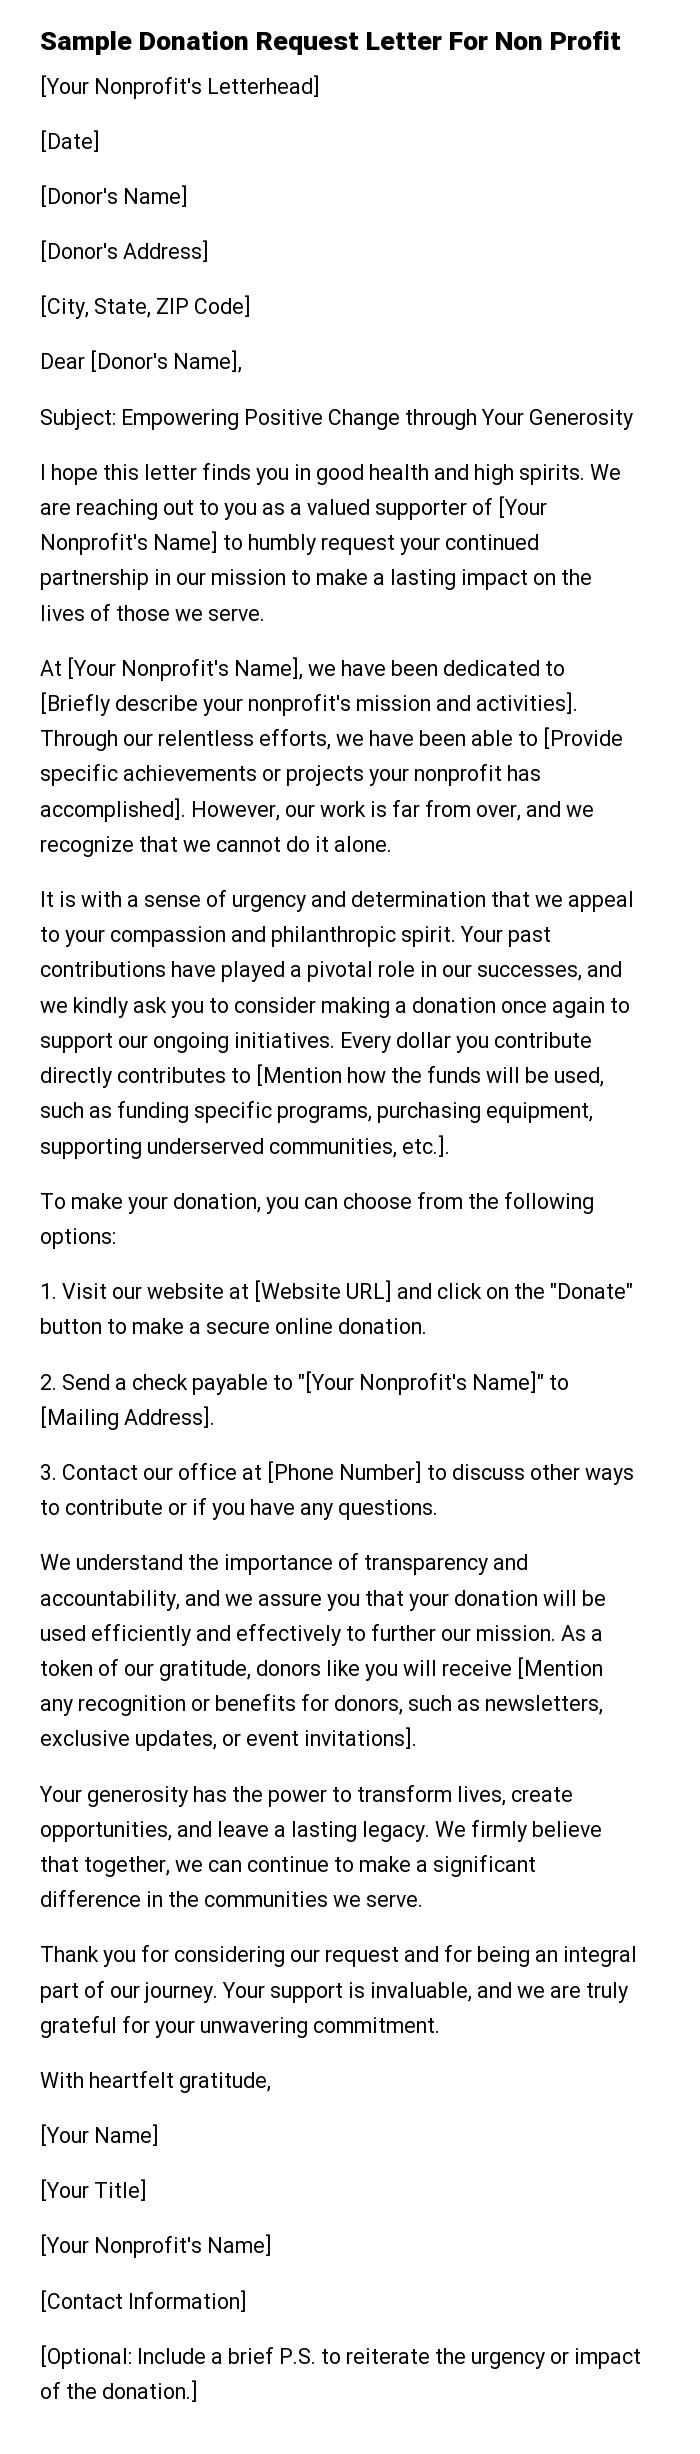 Sample Donation Request Letter For Non Profit